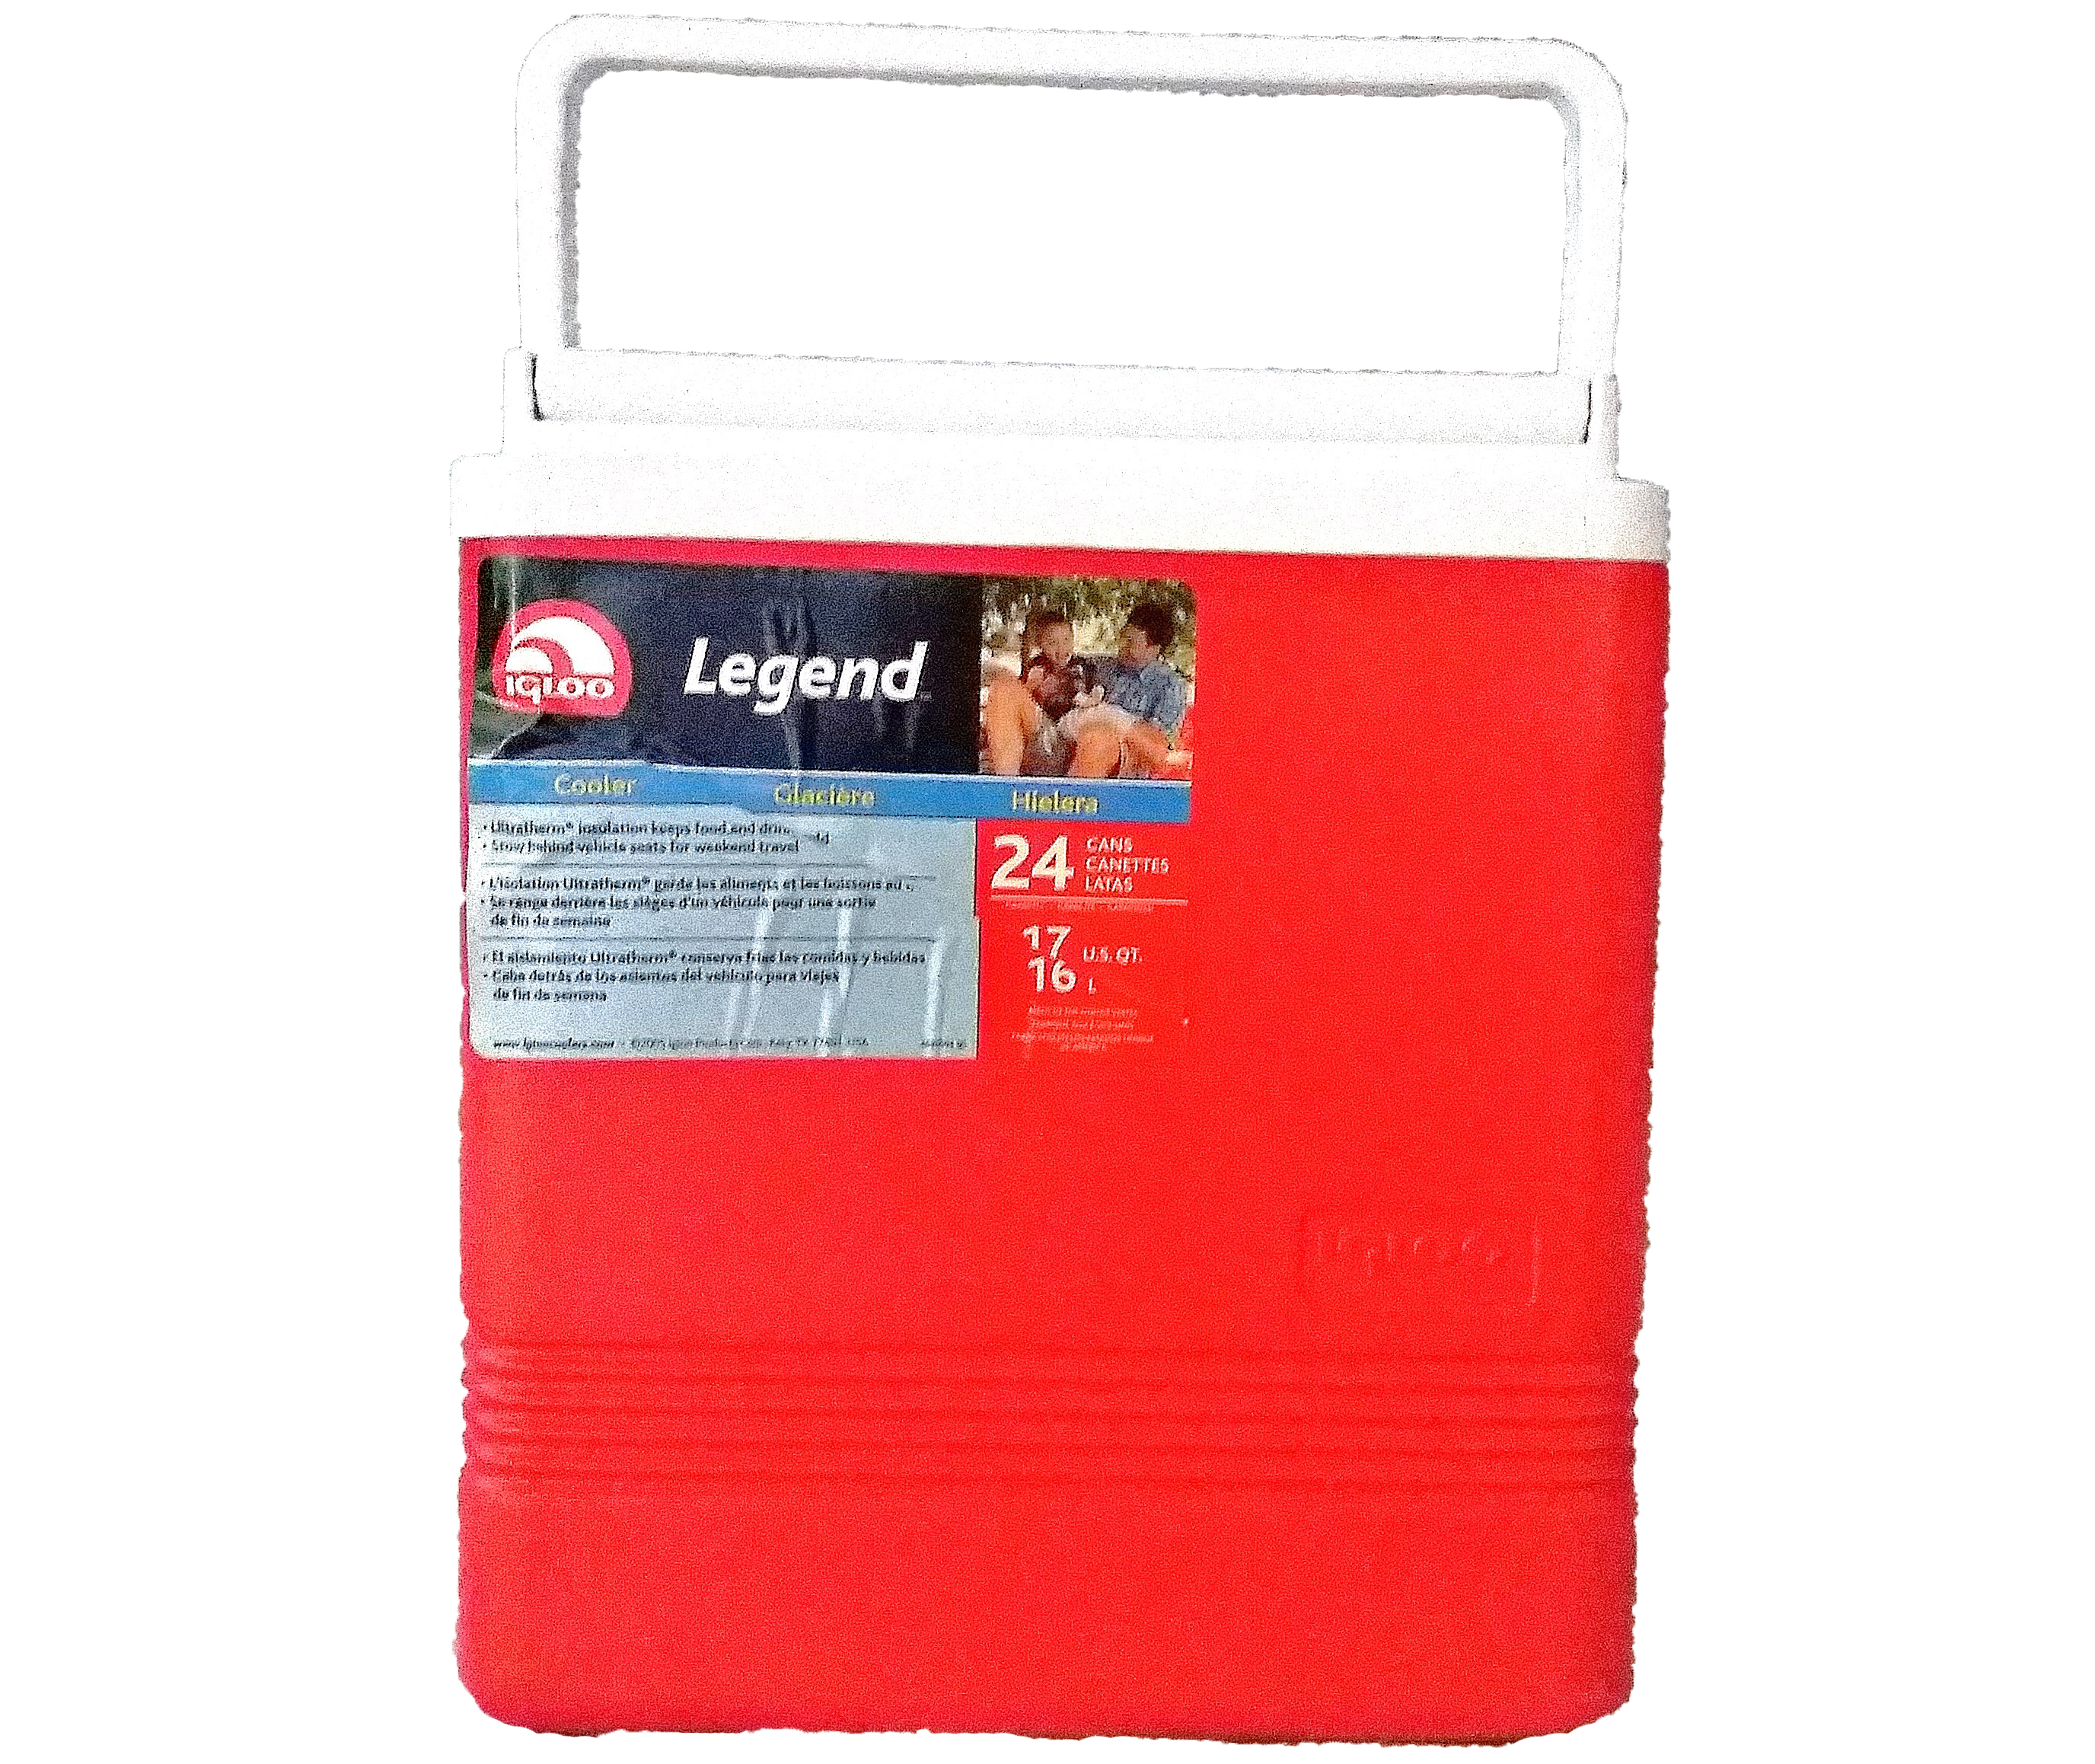 Portable fridge Igloo Legend 24, 16 lt